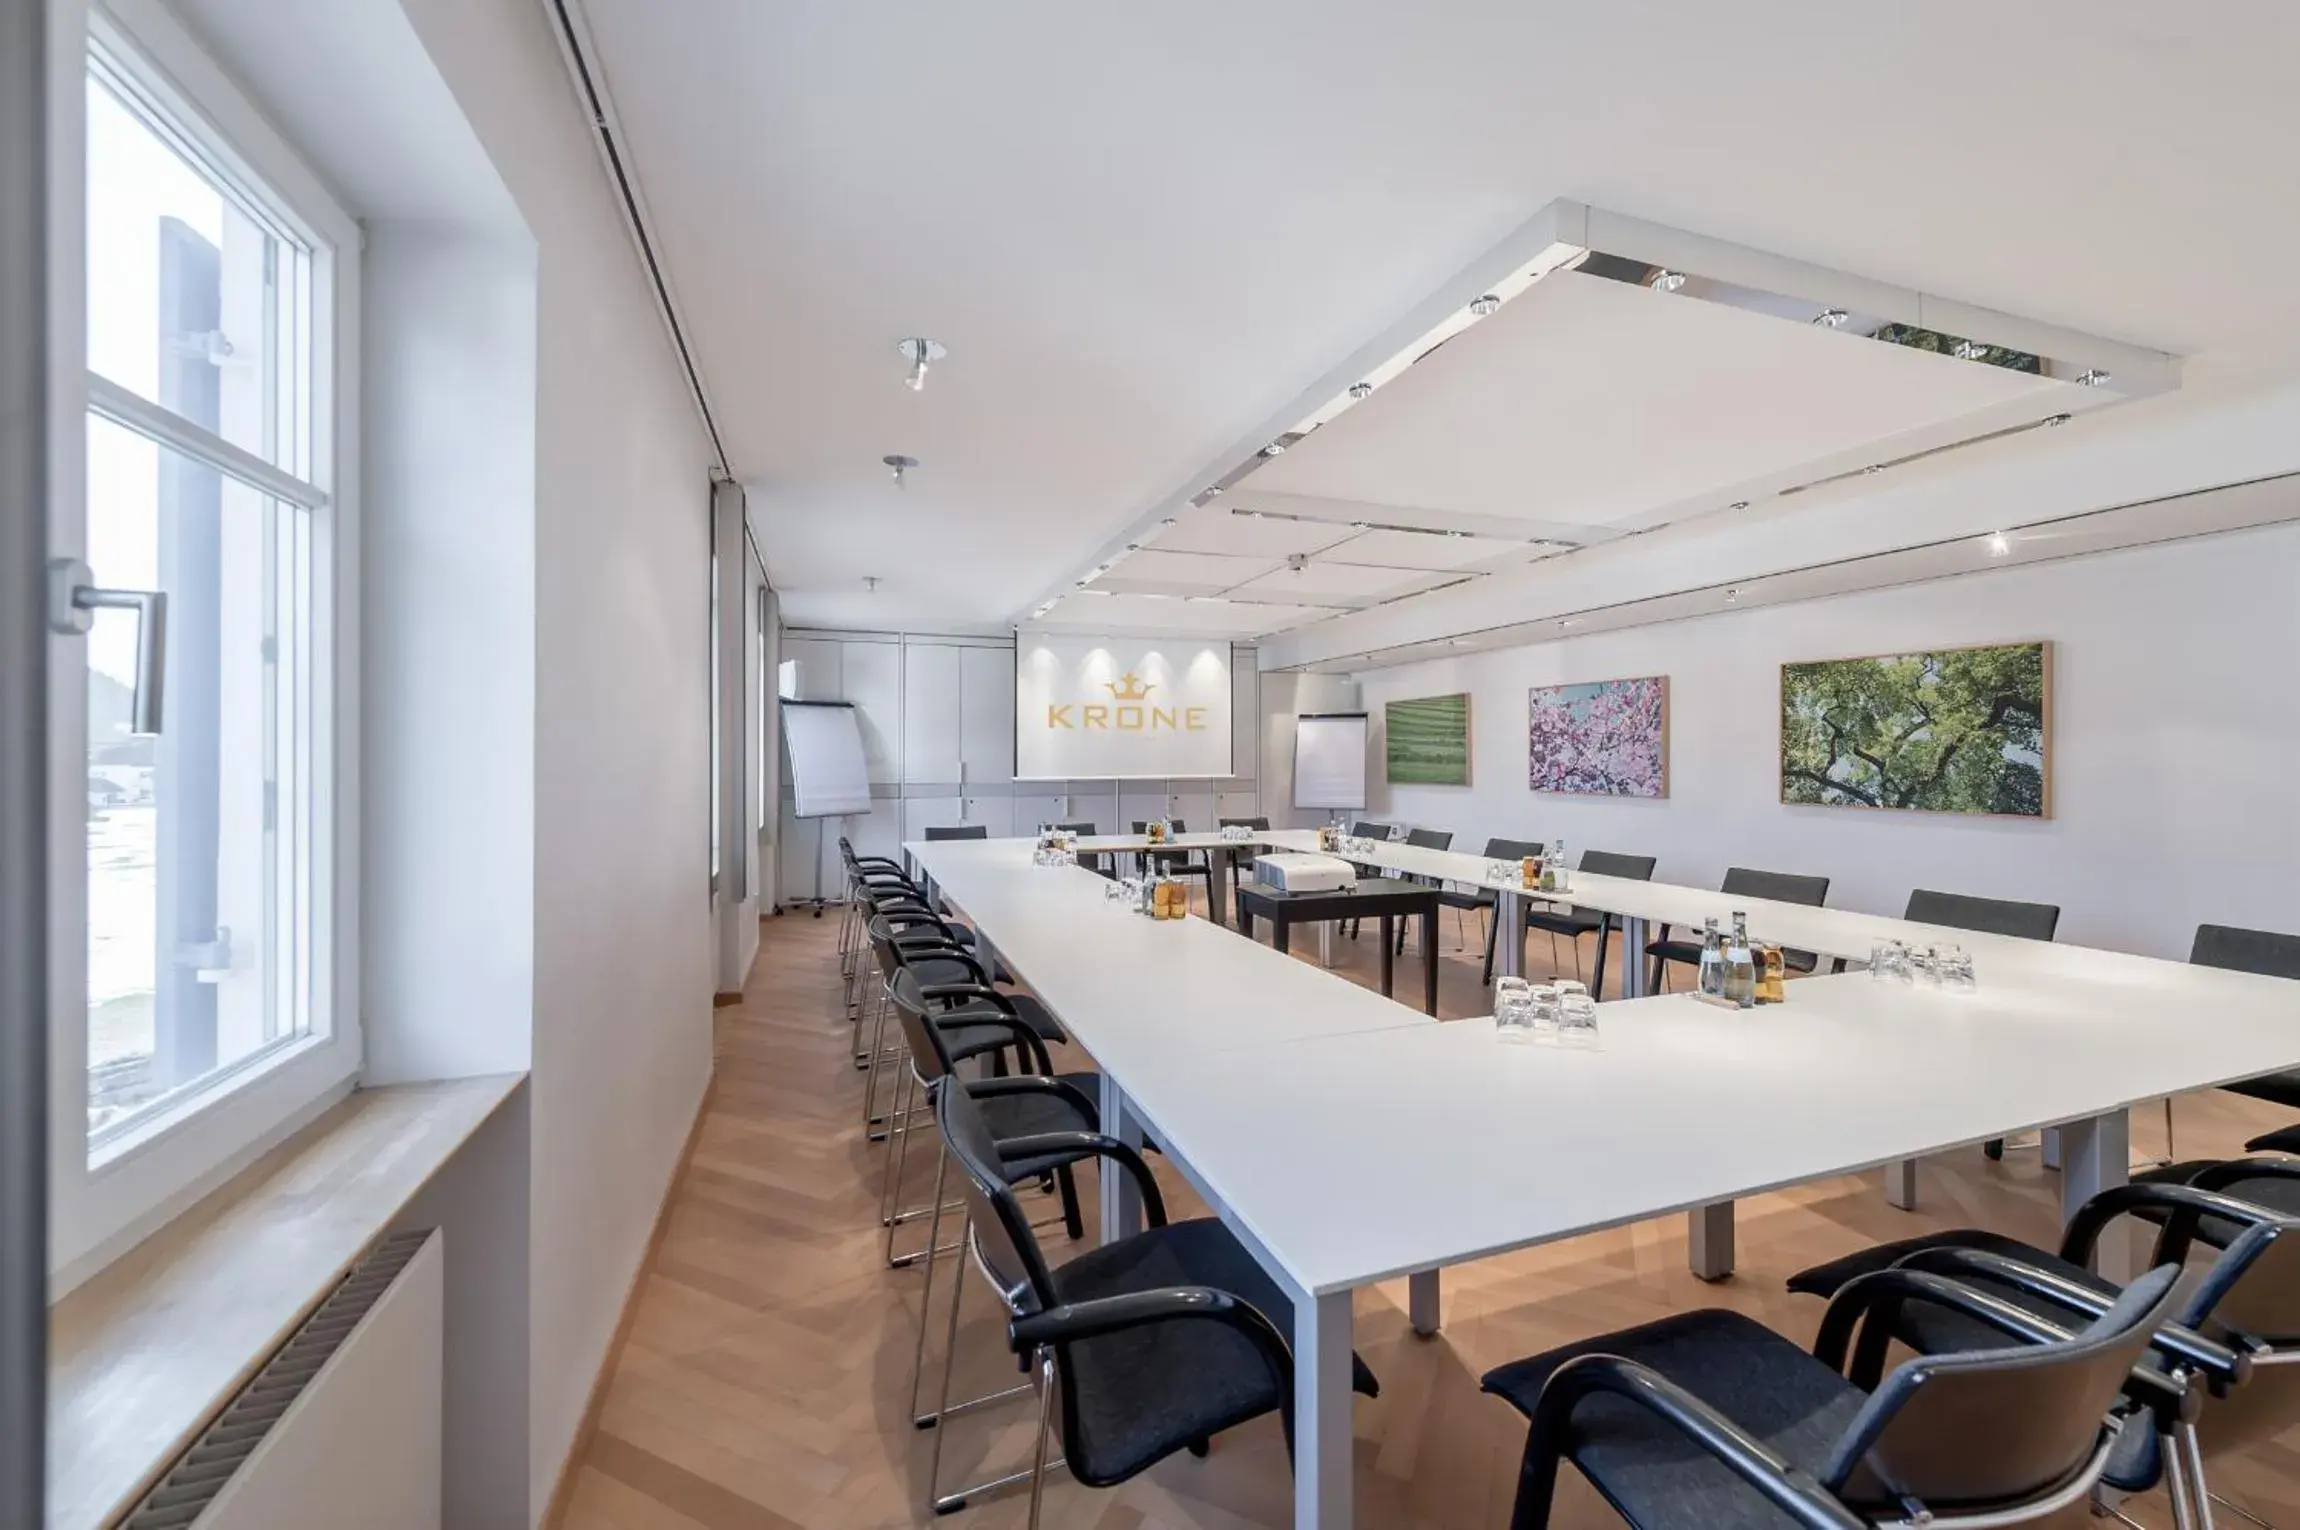 Meeting/conference room in Alpenhotel Krone